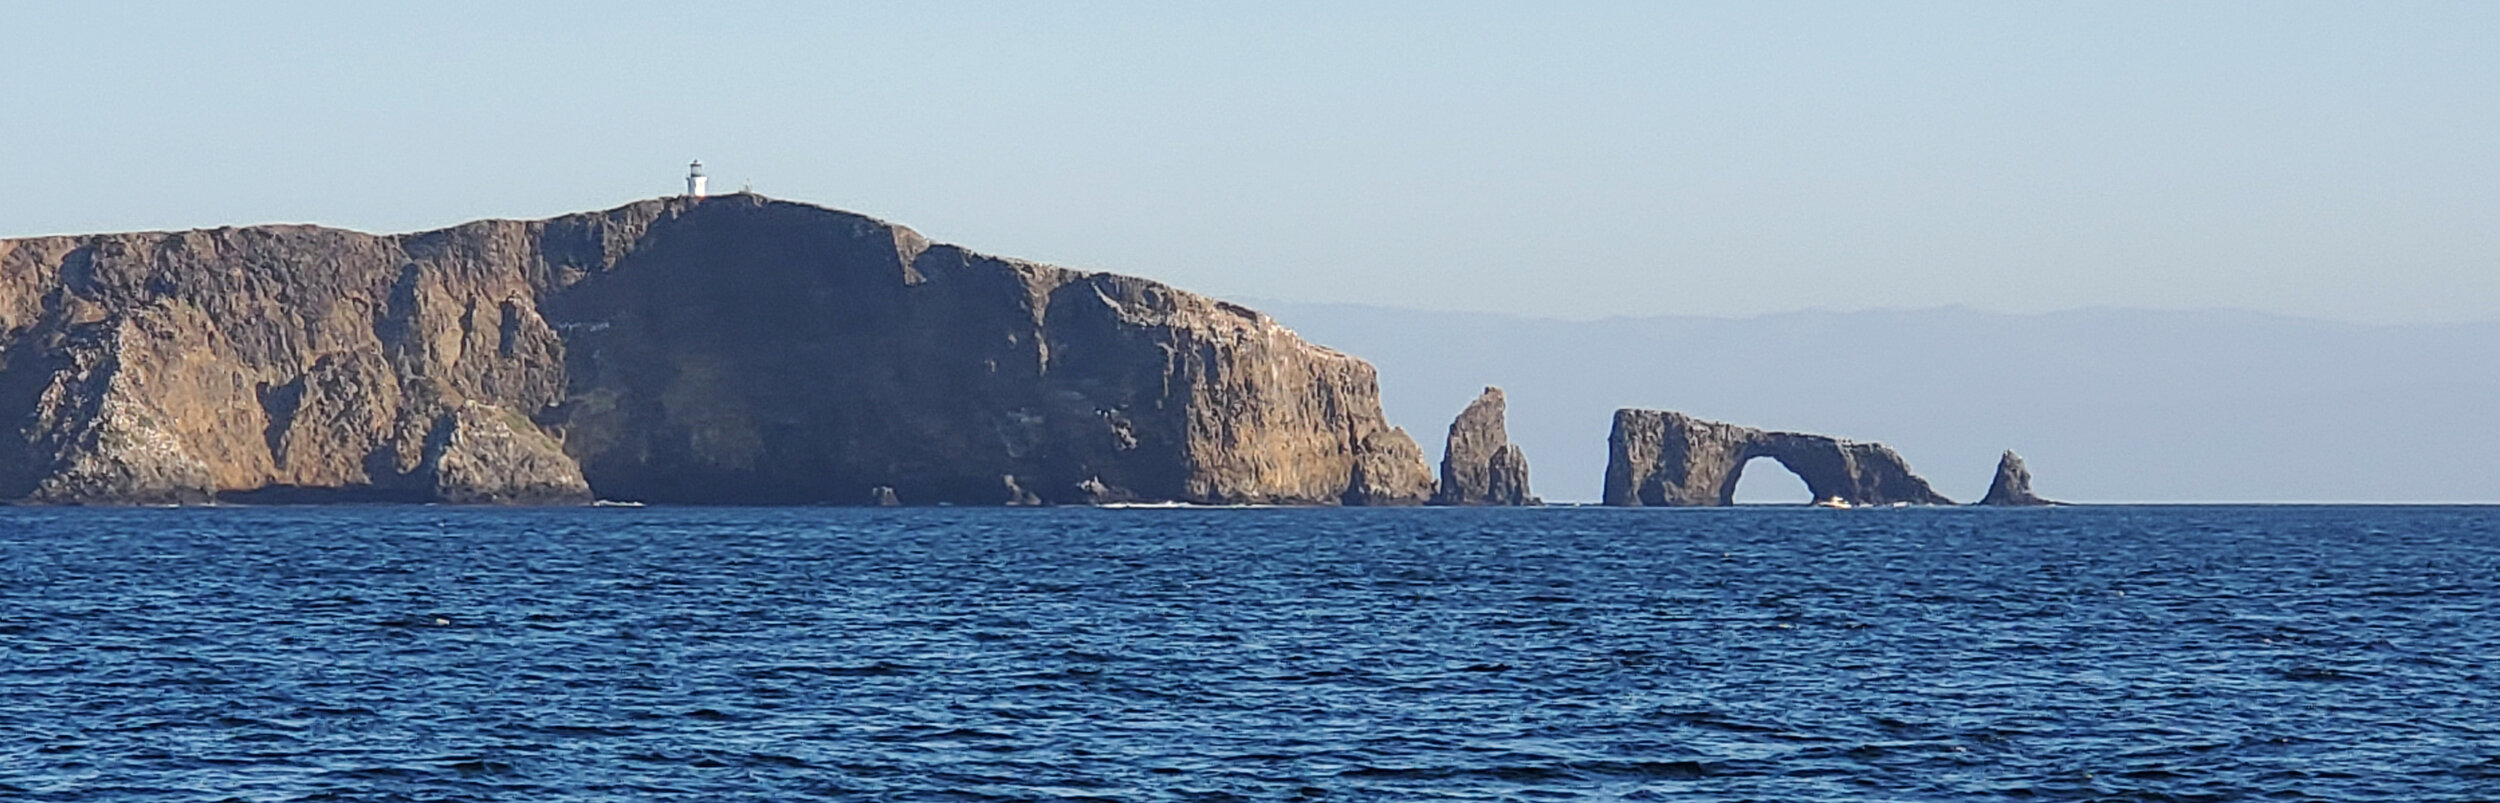 Catalina ist Bogen.jpg